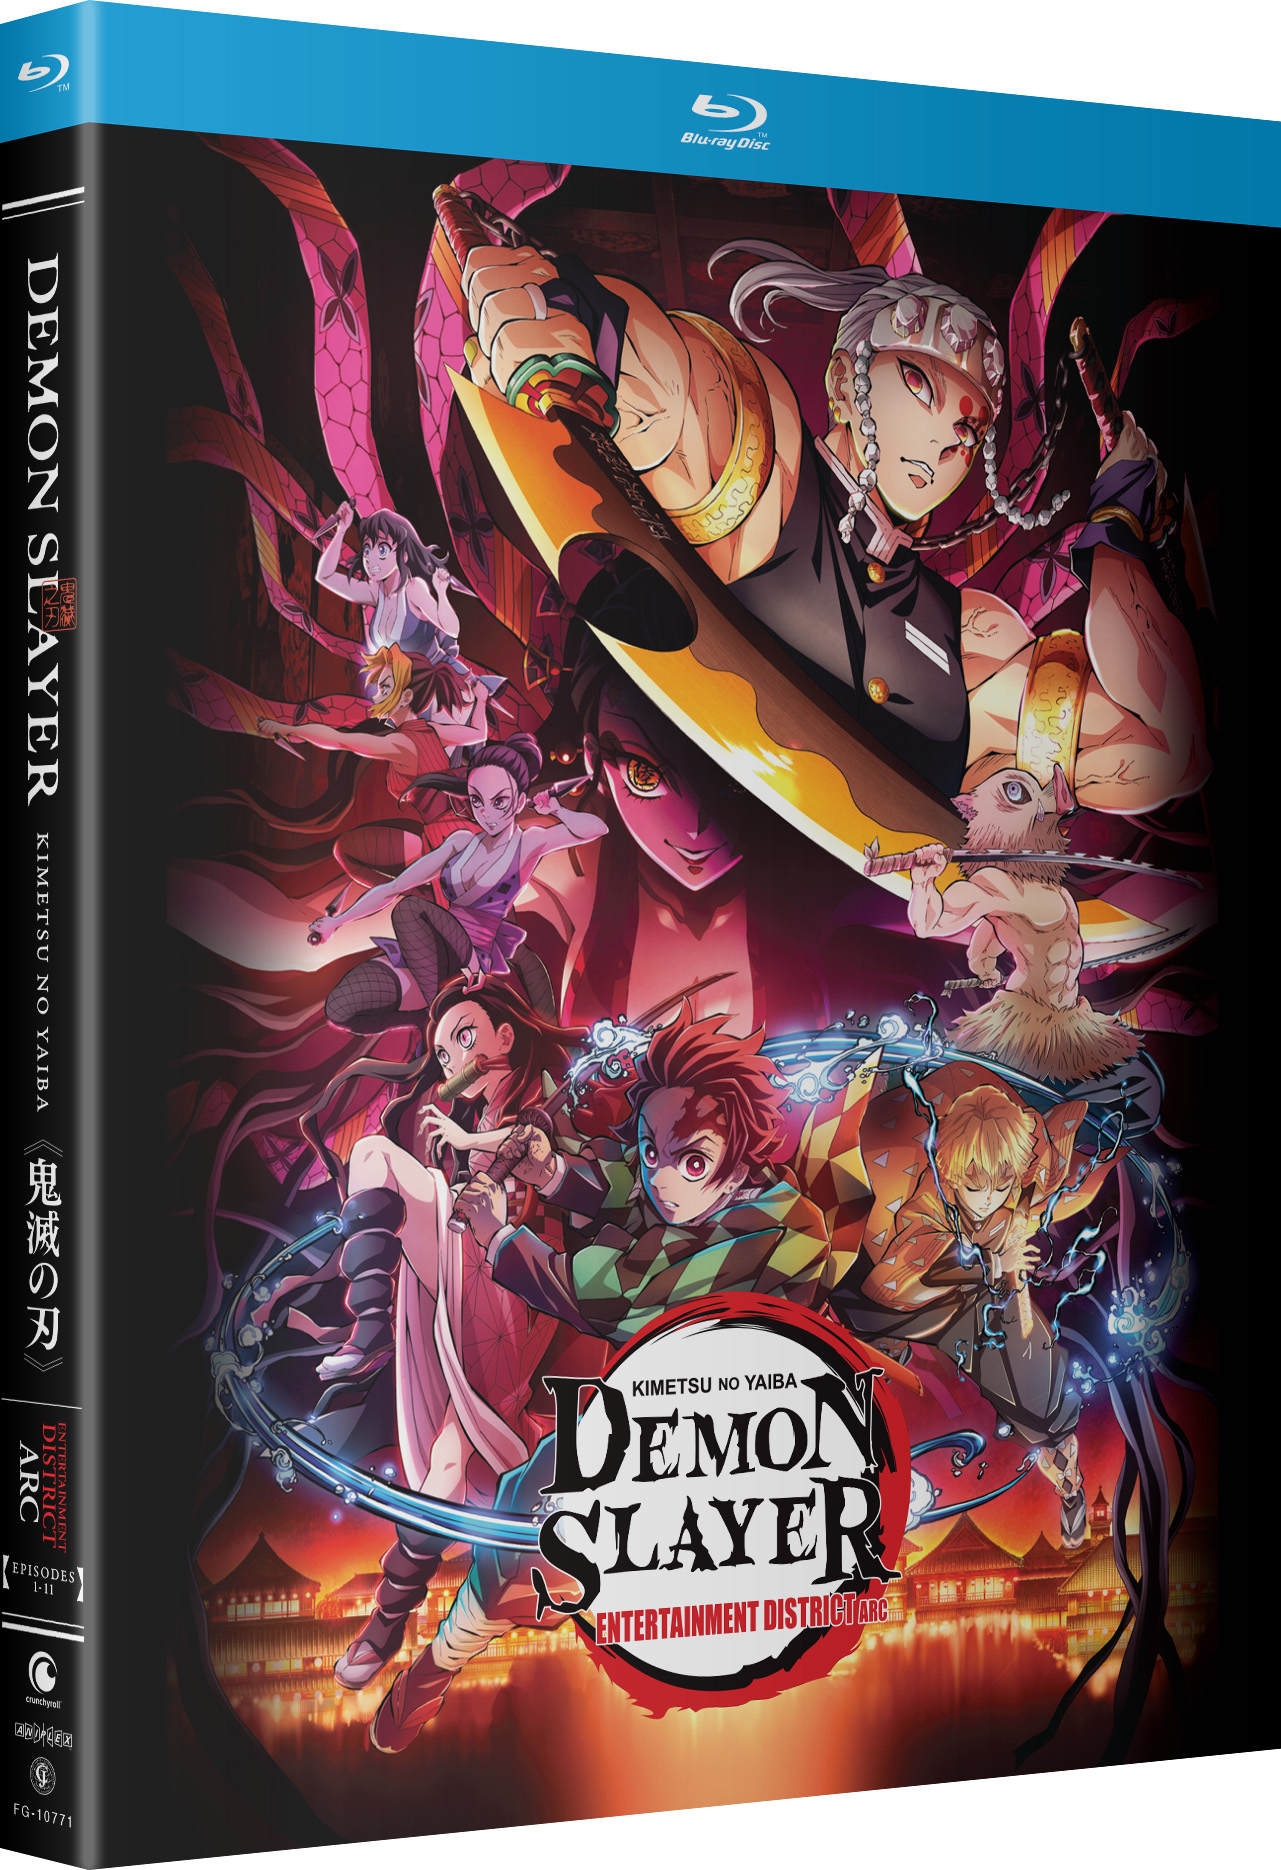 Watch Demon Slayer: Kimetsu No Yaiba Entertainment District Arc